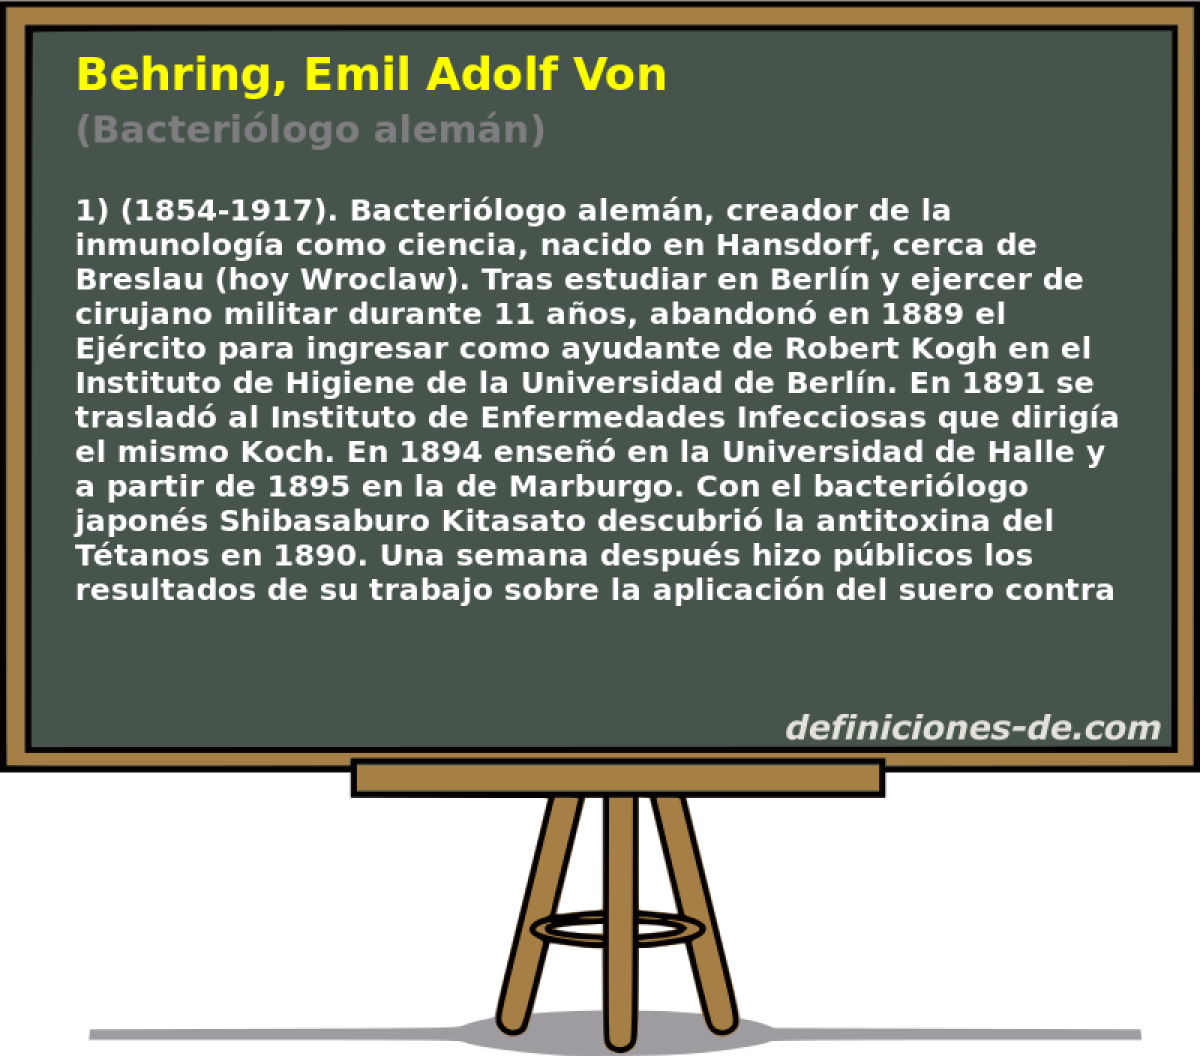 Behring, Emil Adolf Von (Bacterilogo alemn)